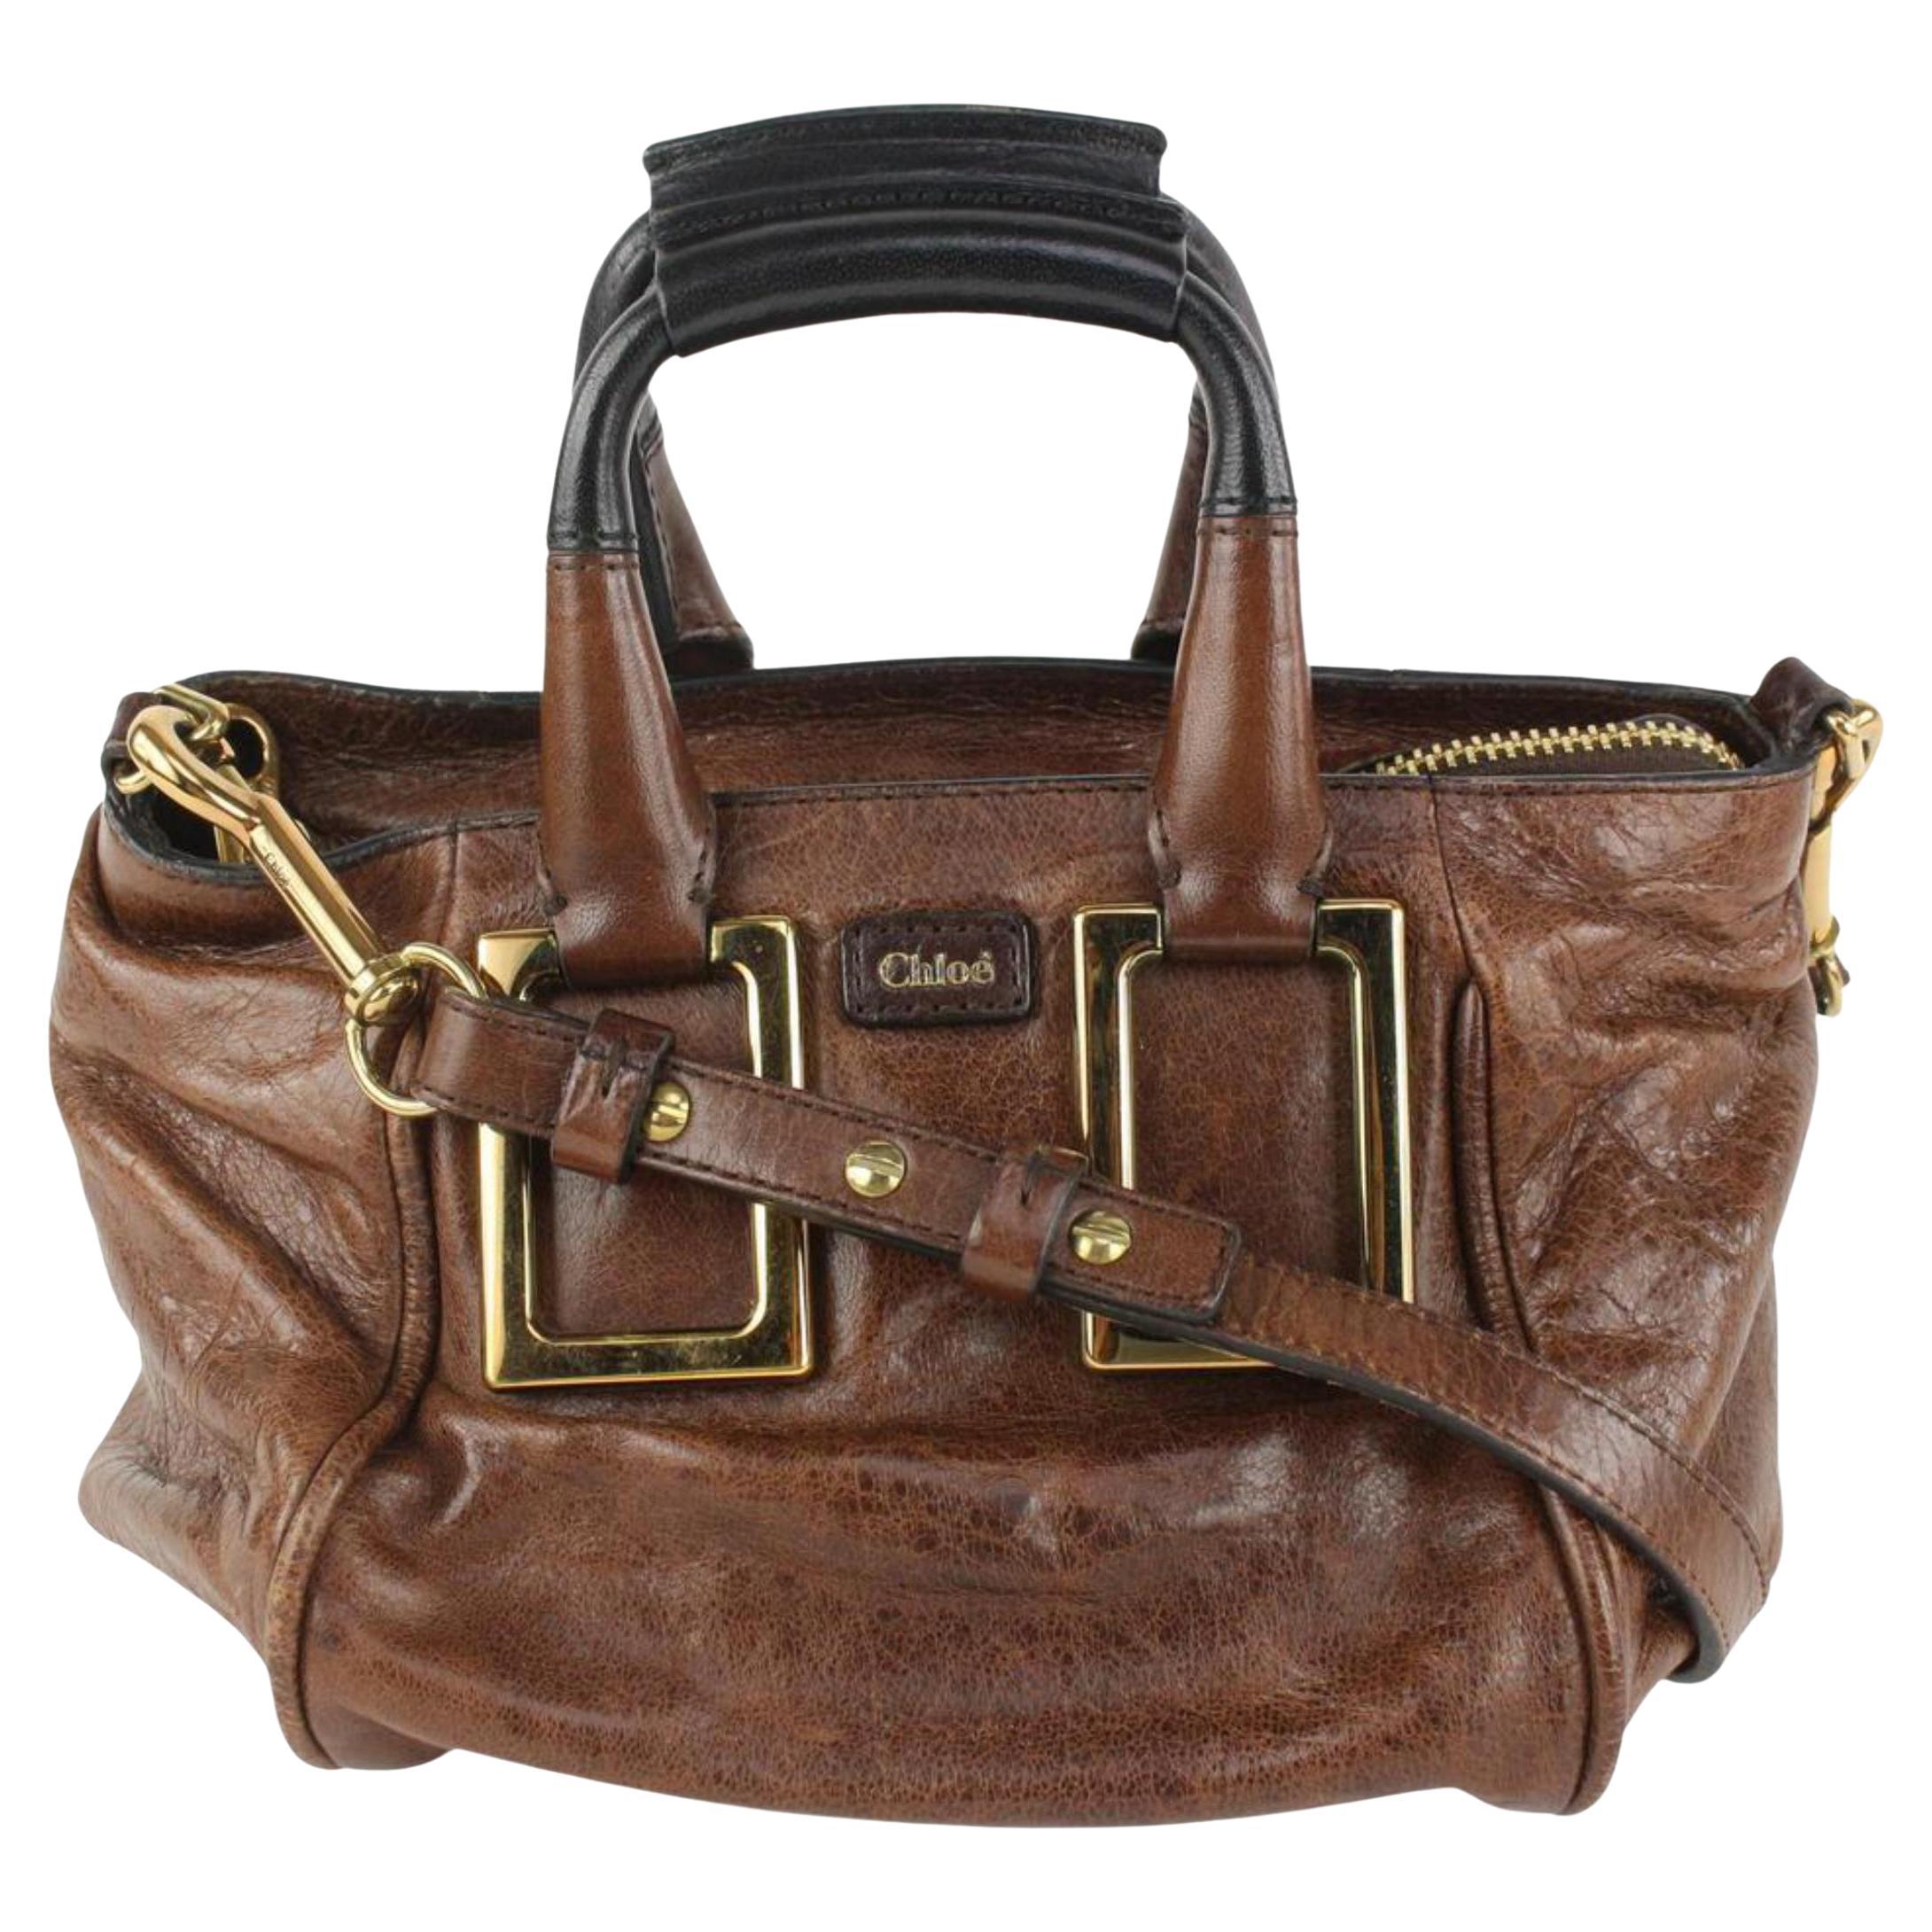 Chloe Ethel Leather Satchel Bag with detachable strap - Bags